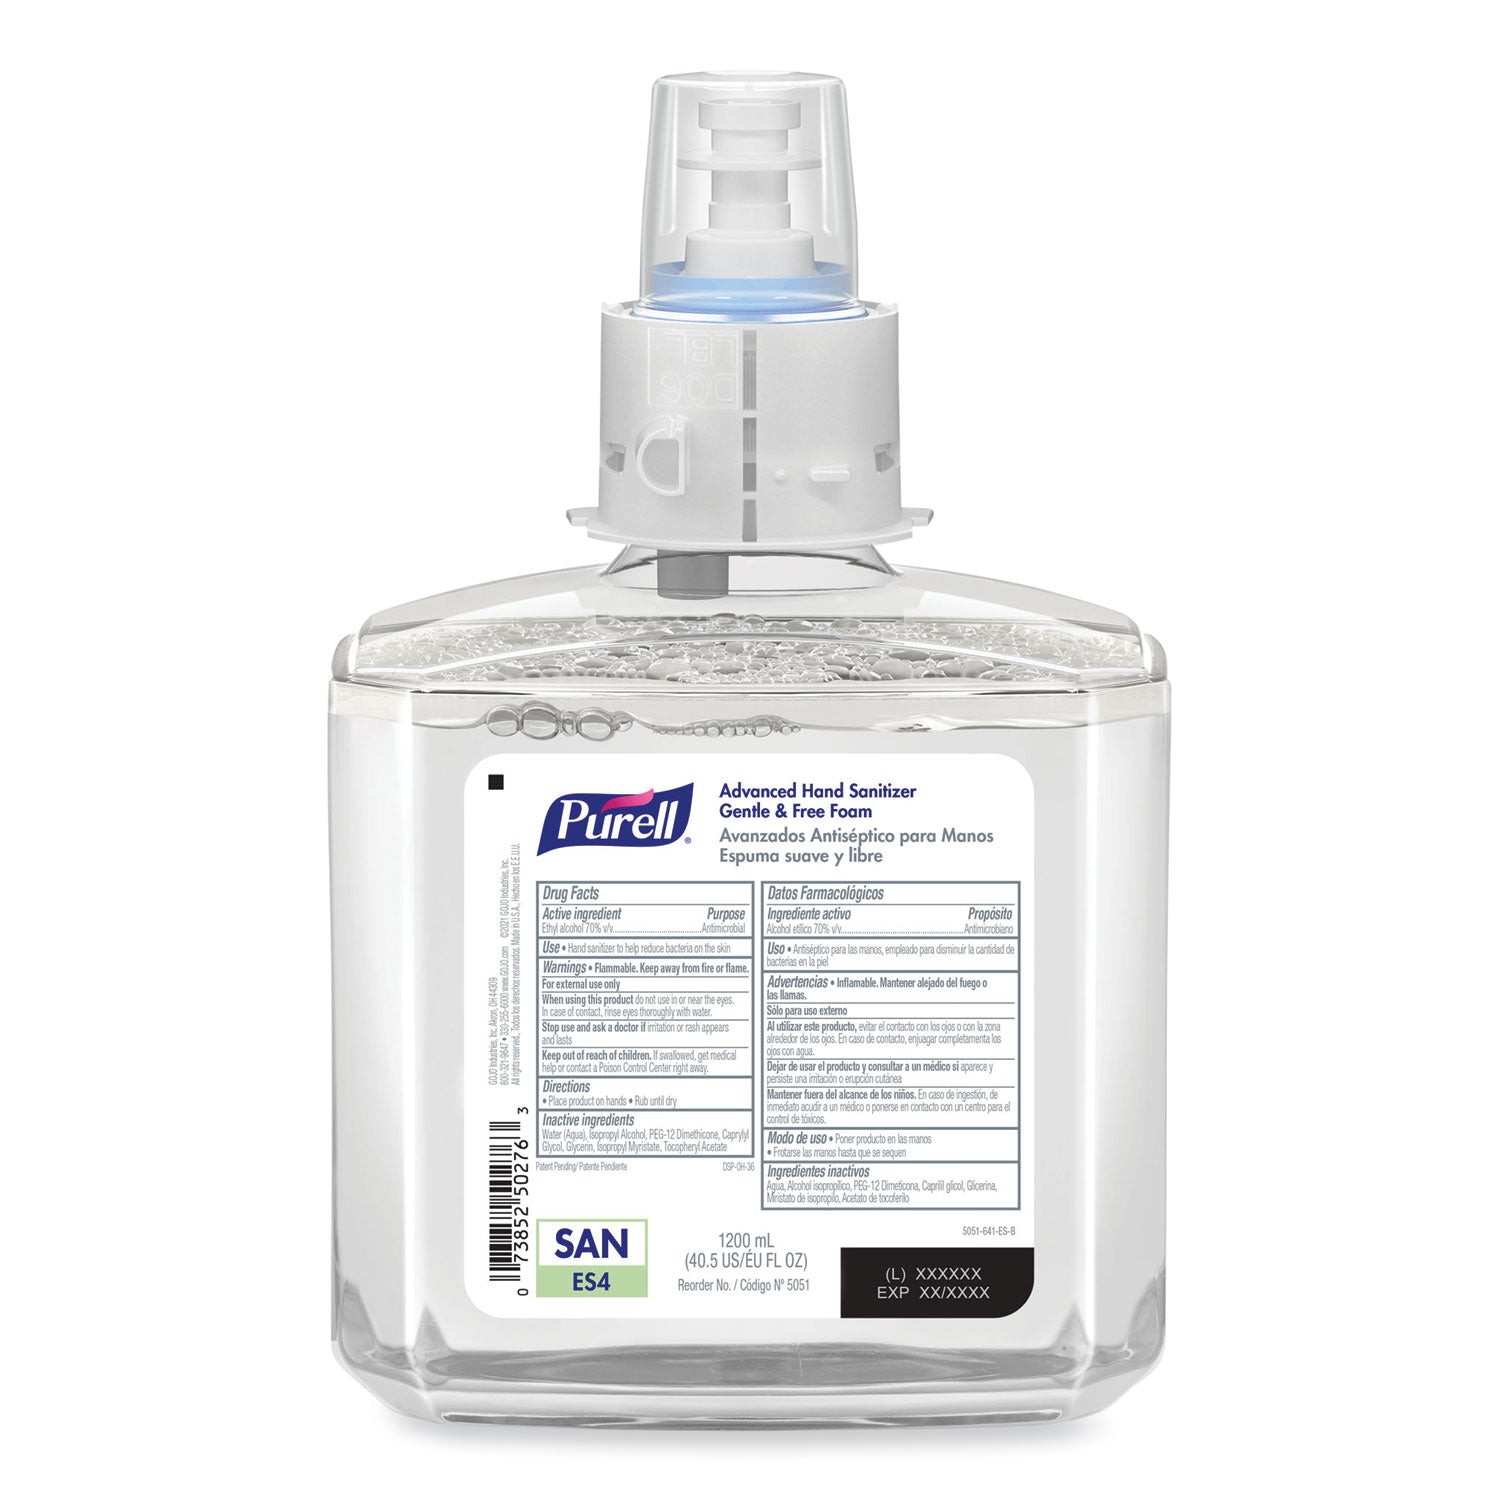 advanced-hand-sanitizer-gentle-and-free-foam-1200-ml-refill-fragrance-free-for-es4-dispensers-2-carton_goj505102 - 2